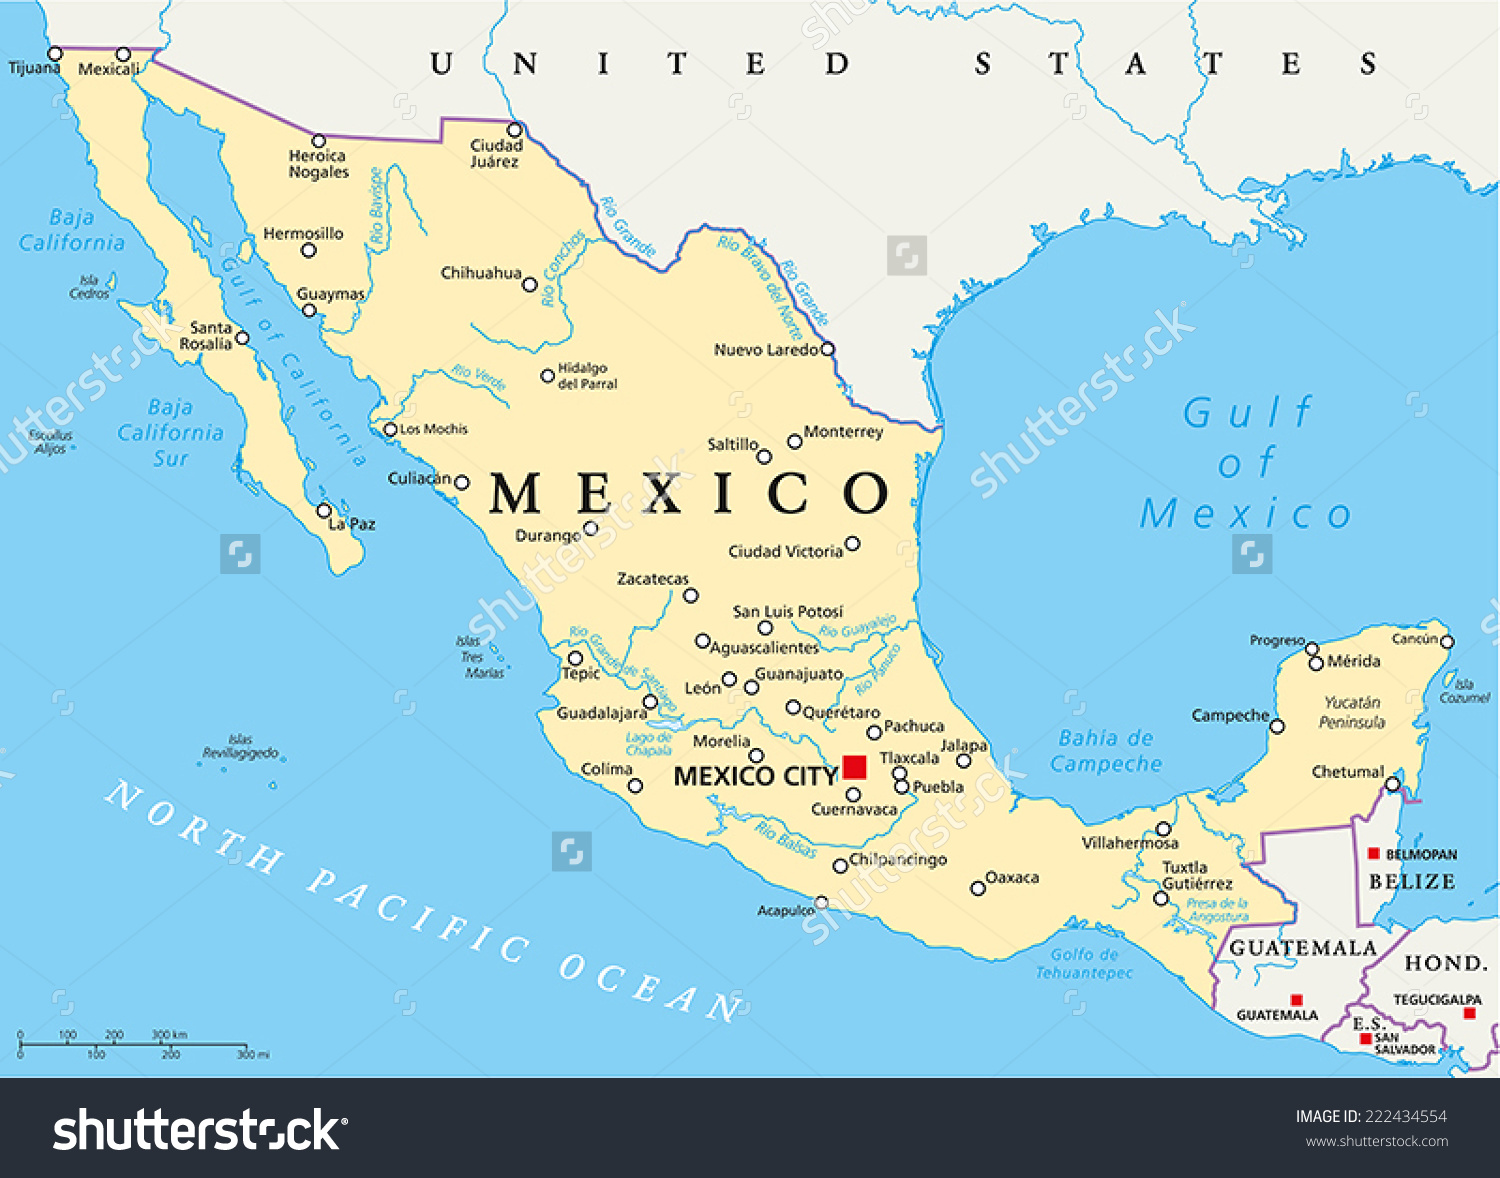 Mexico Laments Death of Citizen Shot by US Border Agent